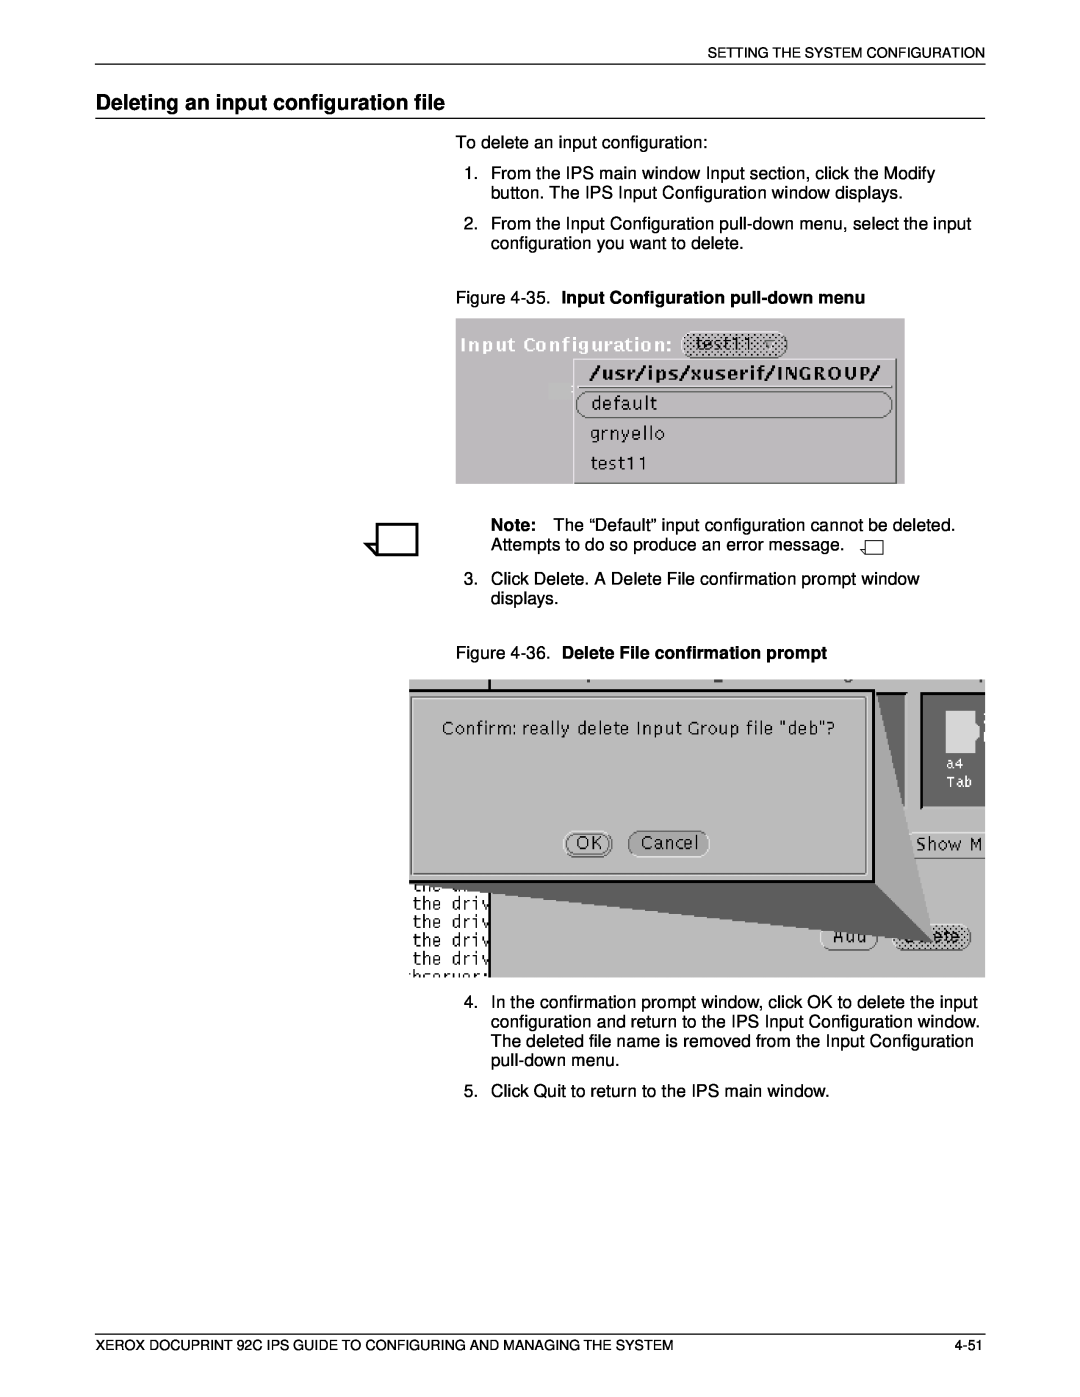 Xerox 92C IPS manual Deleting an input configuration file, 35. Input Configuration pull-down menu 